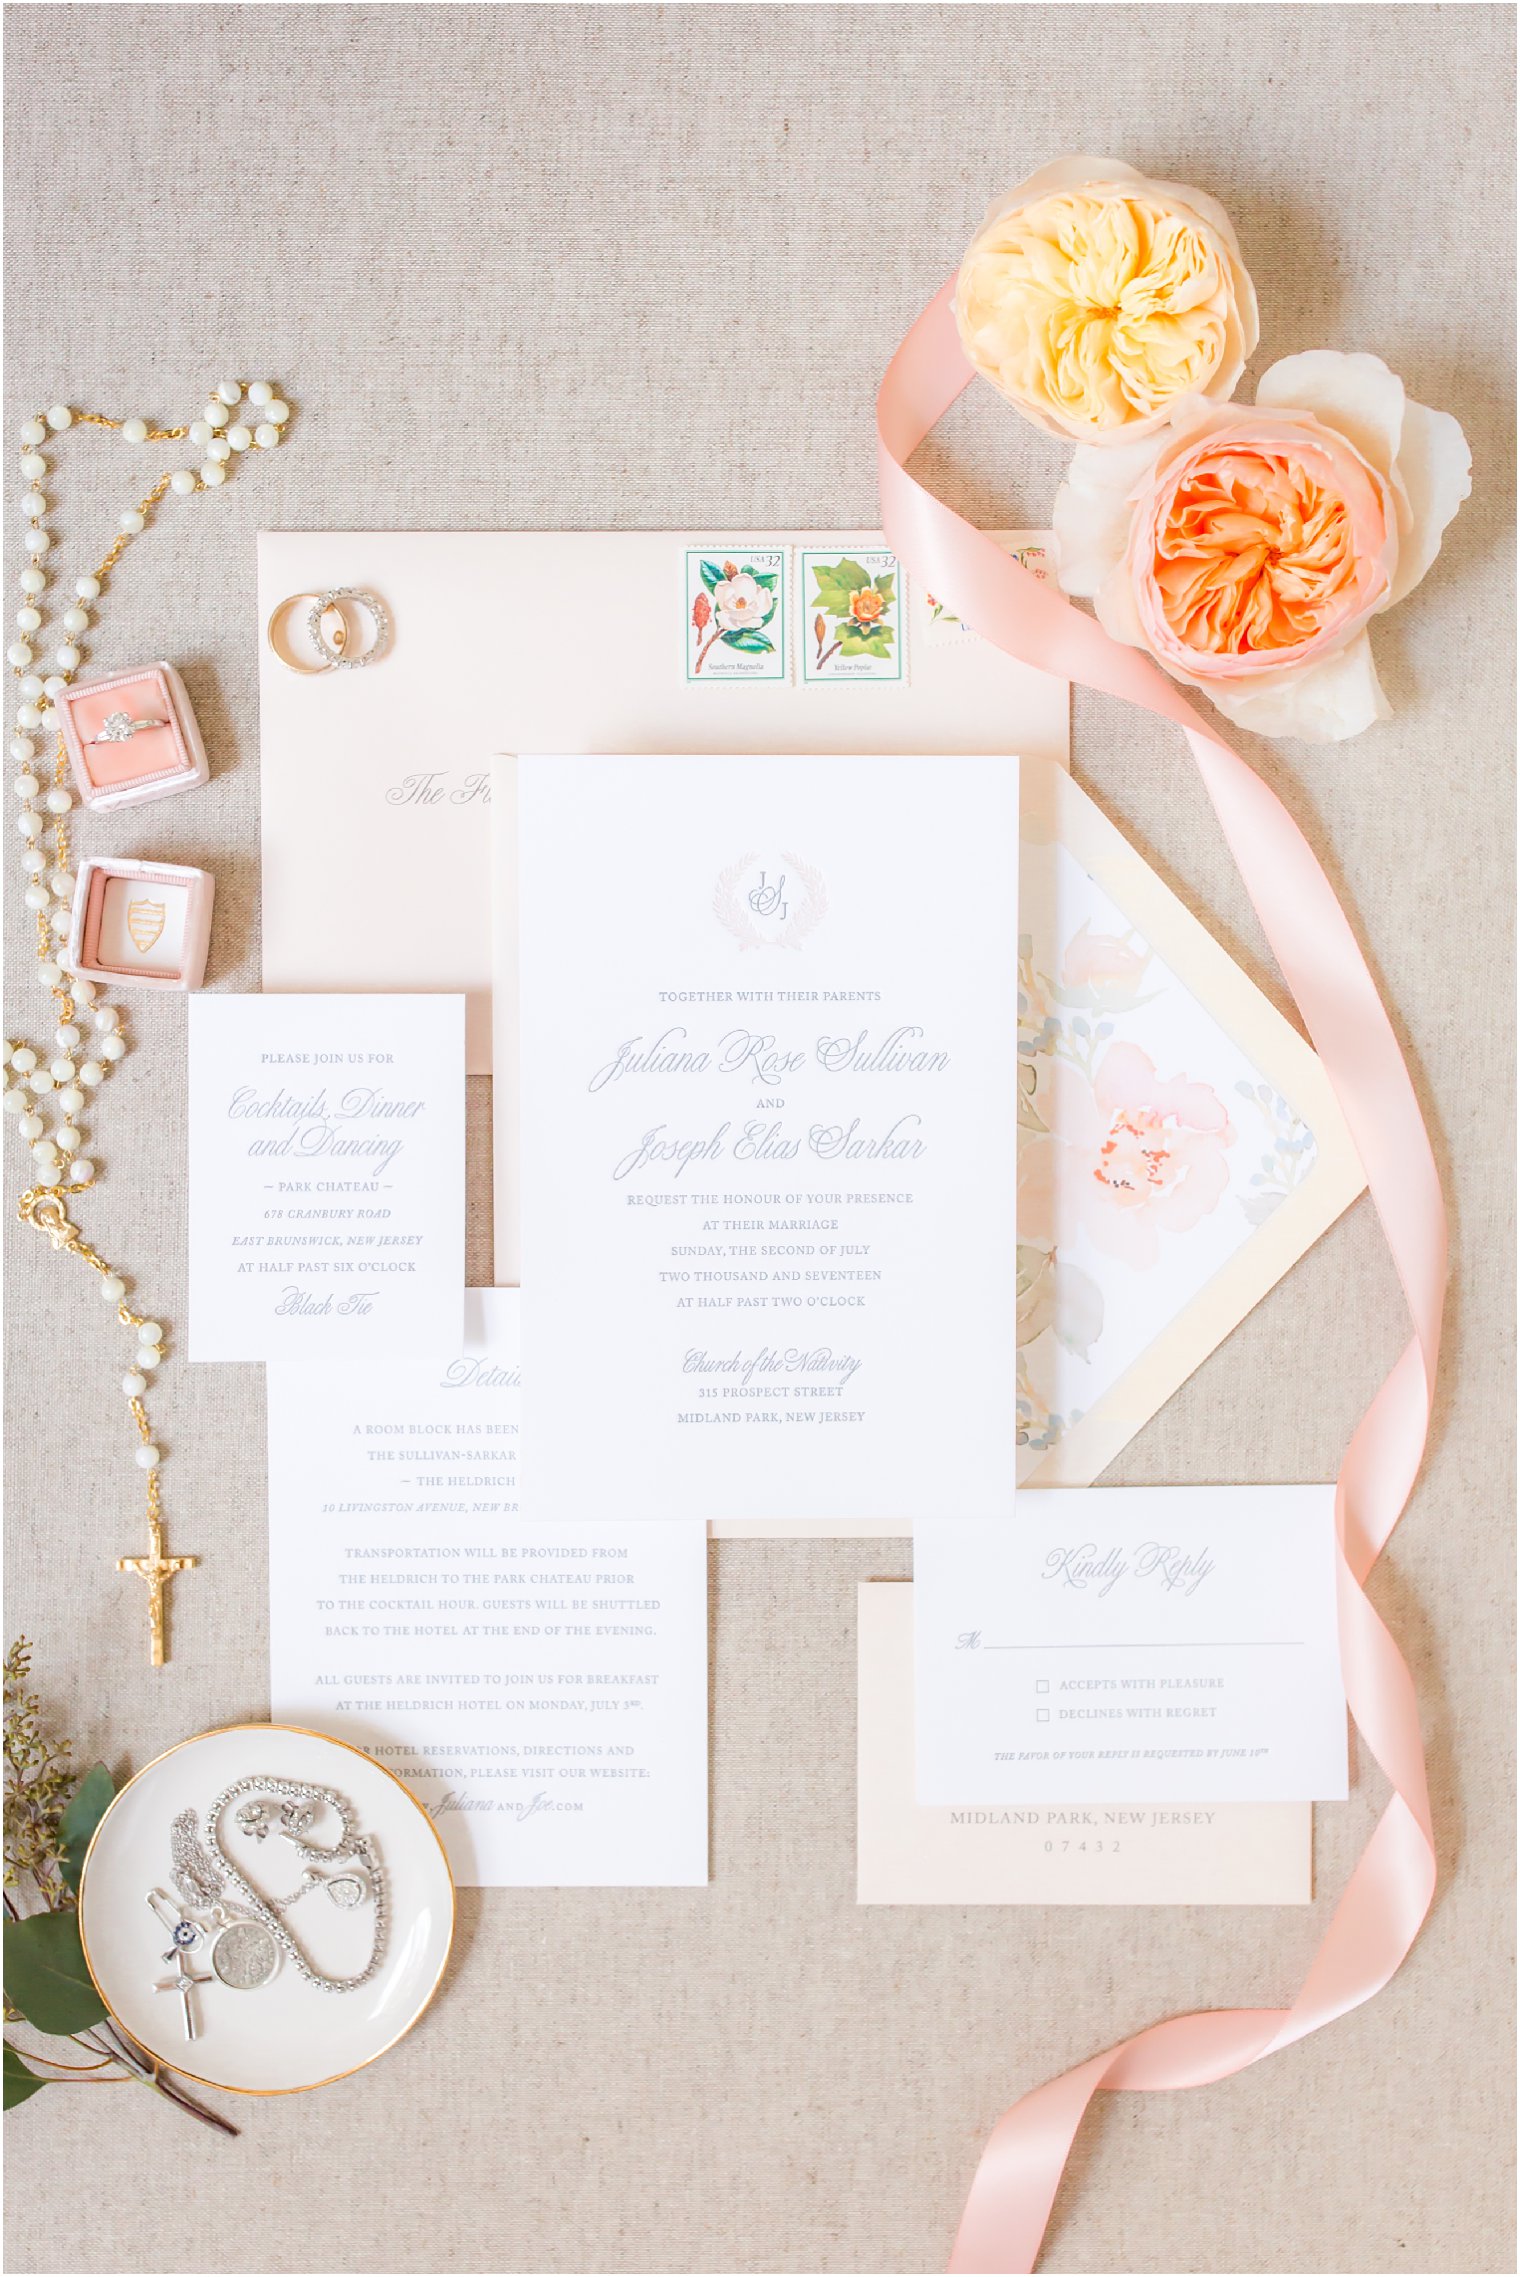 Letterpress invitations by Christa Alexandra Designs | Photo by Idalia Photography